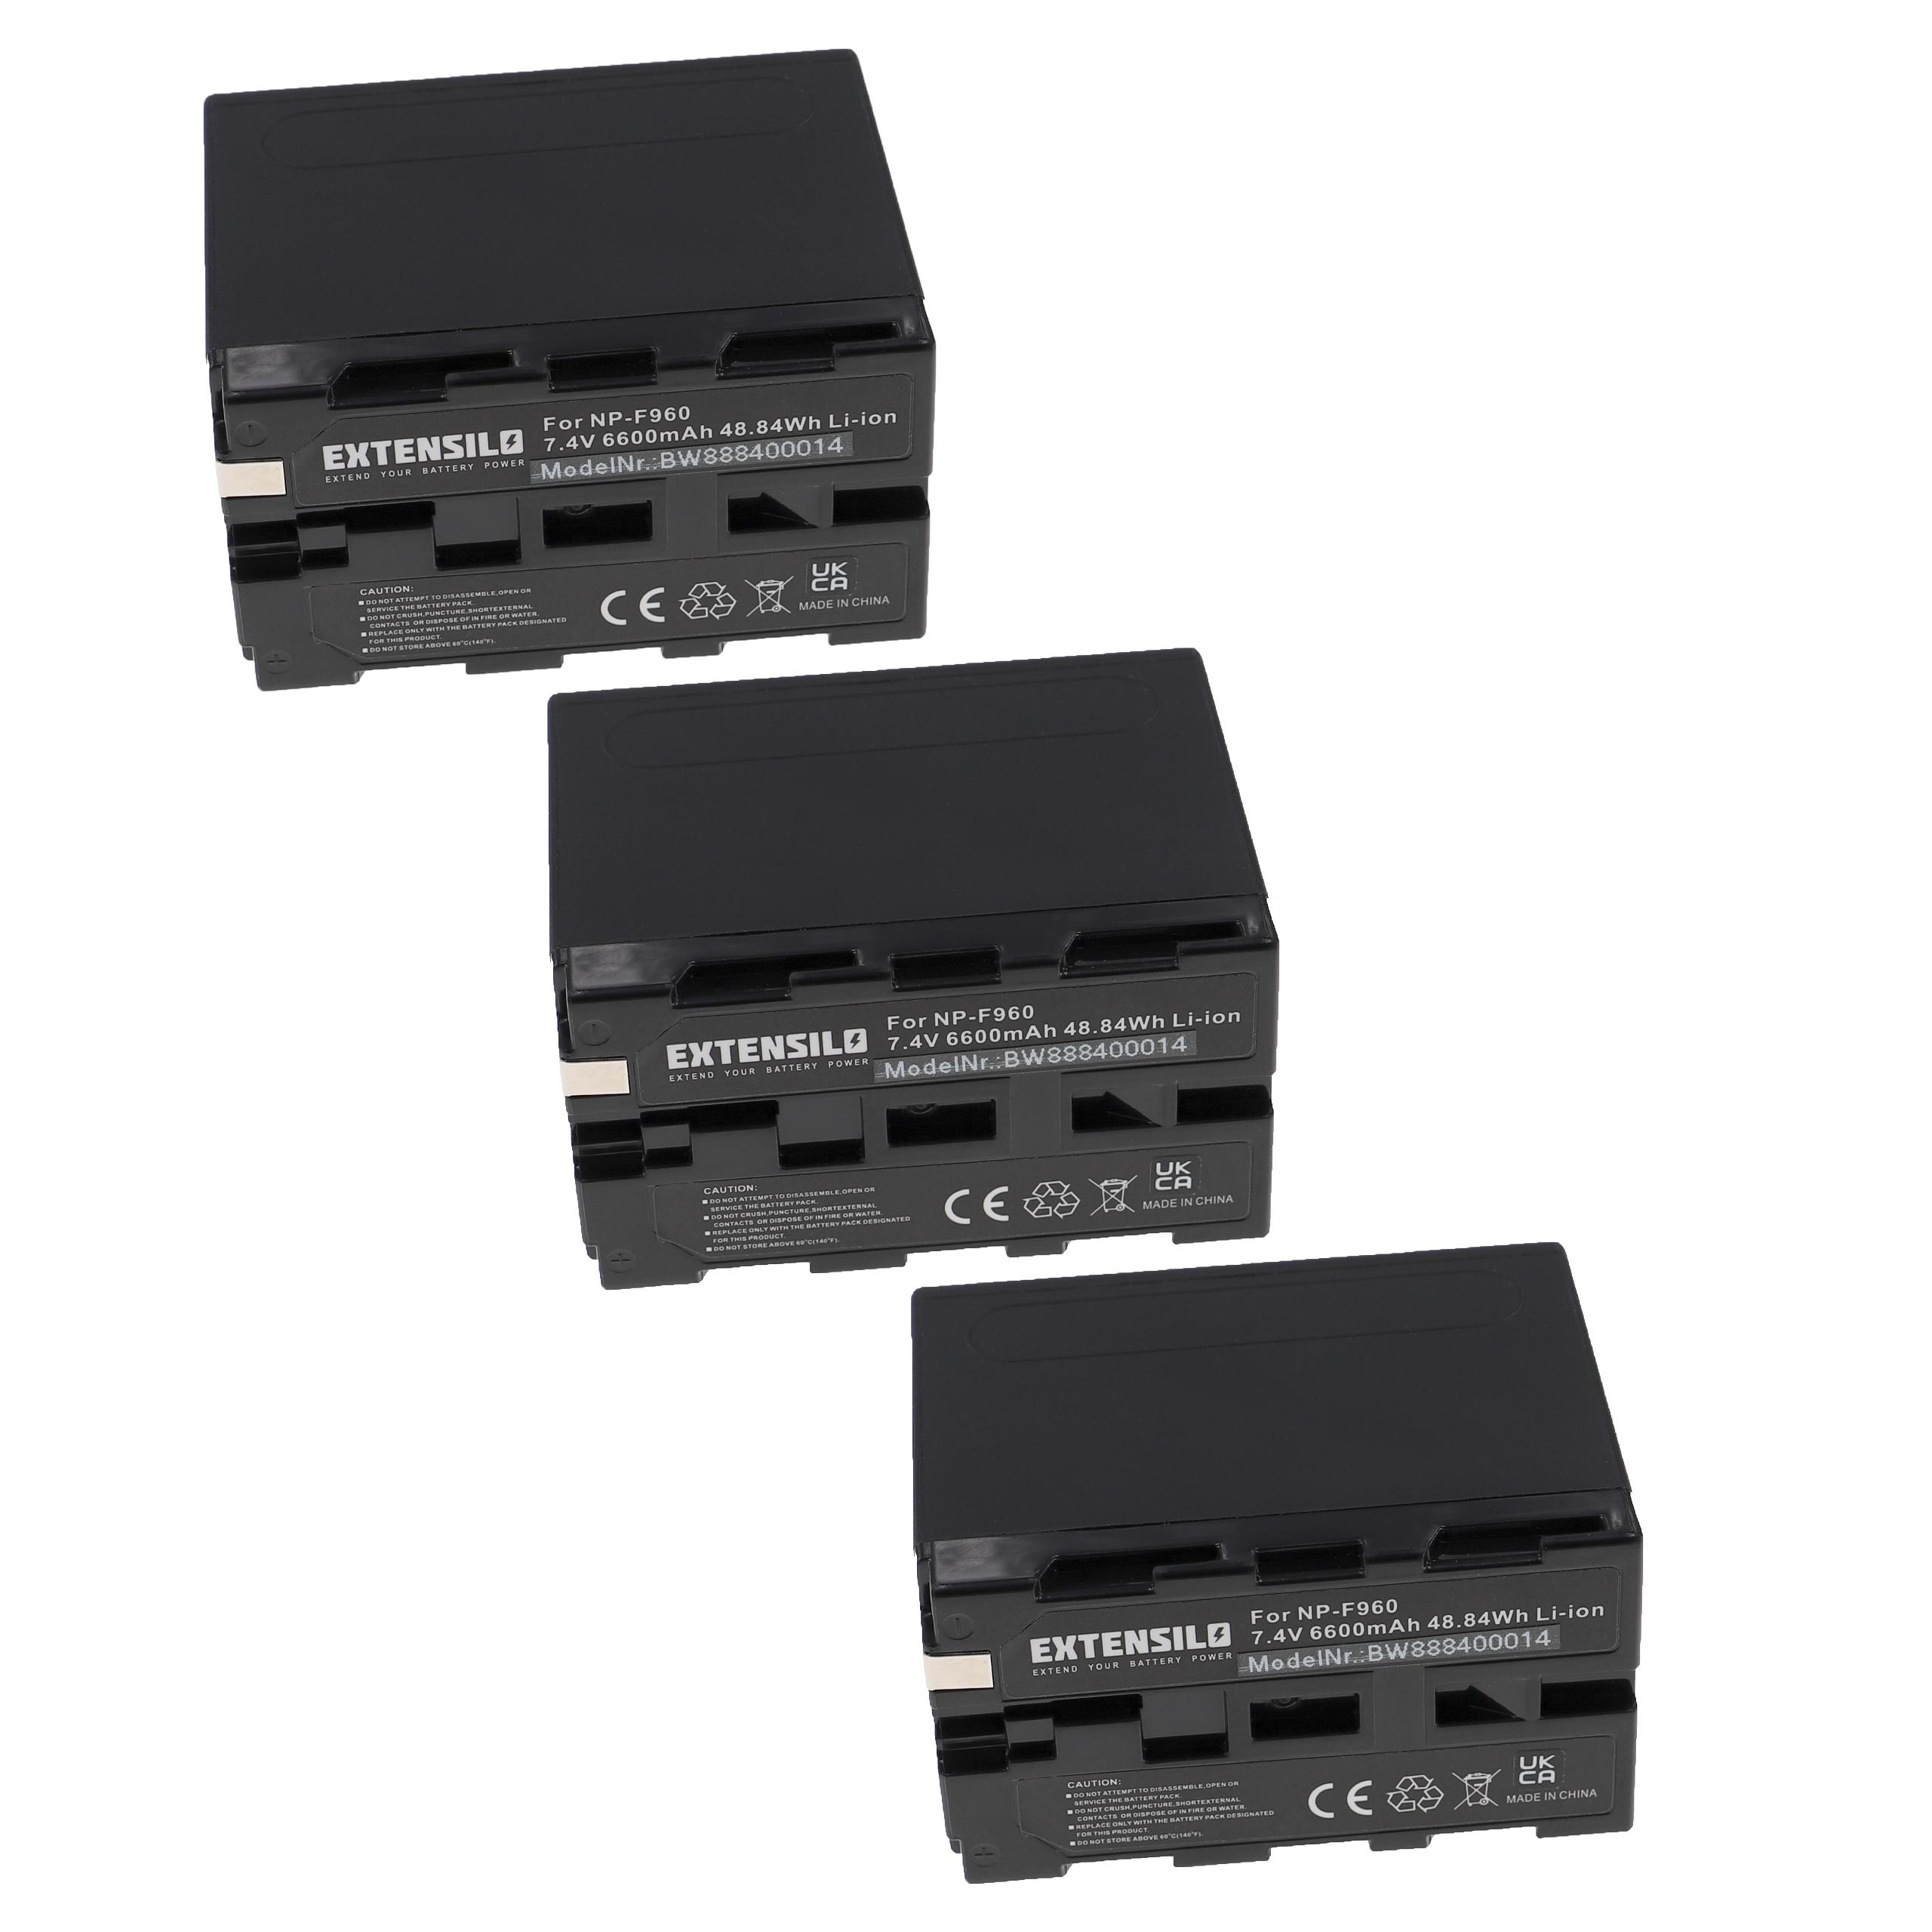 MiniDV DCR-TV900, Li-Ion DCR-VX2000, DCR-VX2100, DCR-TRV900 Kamera, DCR-VX70, - Volt, Akku mit 6600 EXTENSILO DCR-TV900E, 7.4 Sony kompatibel